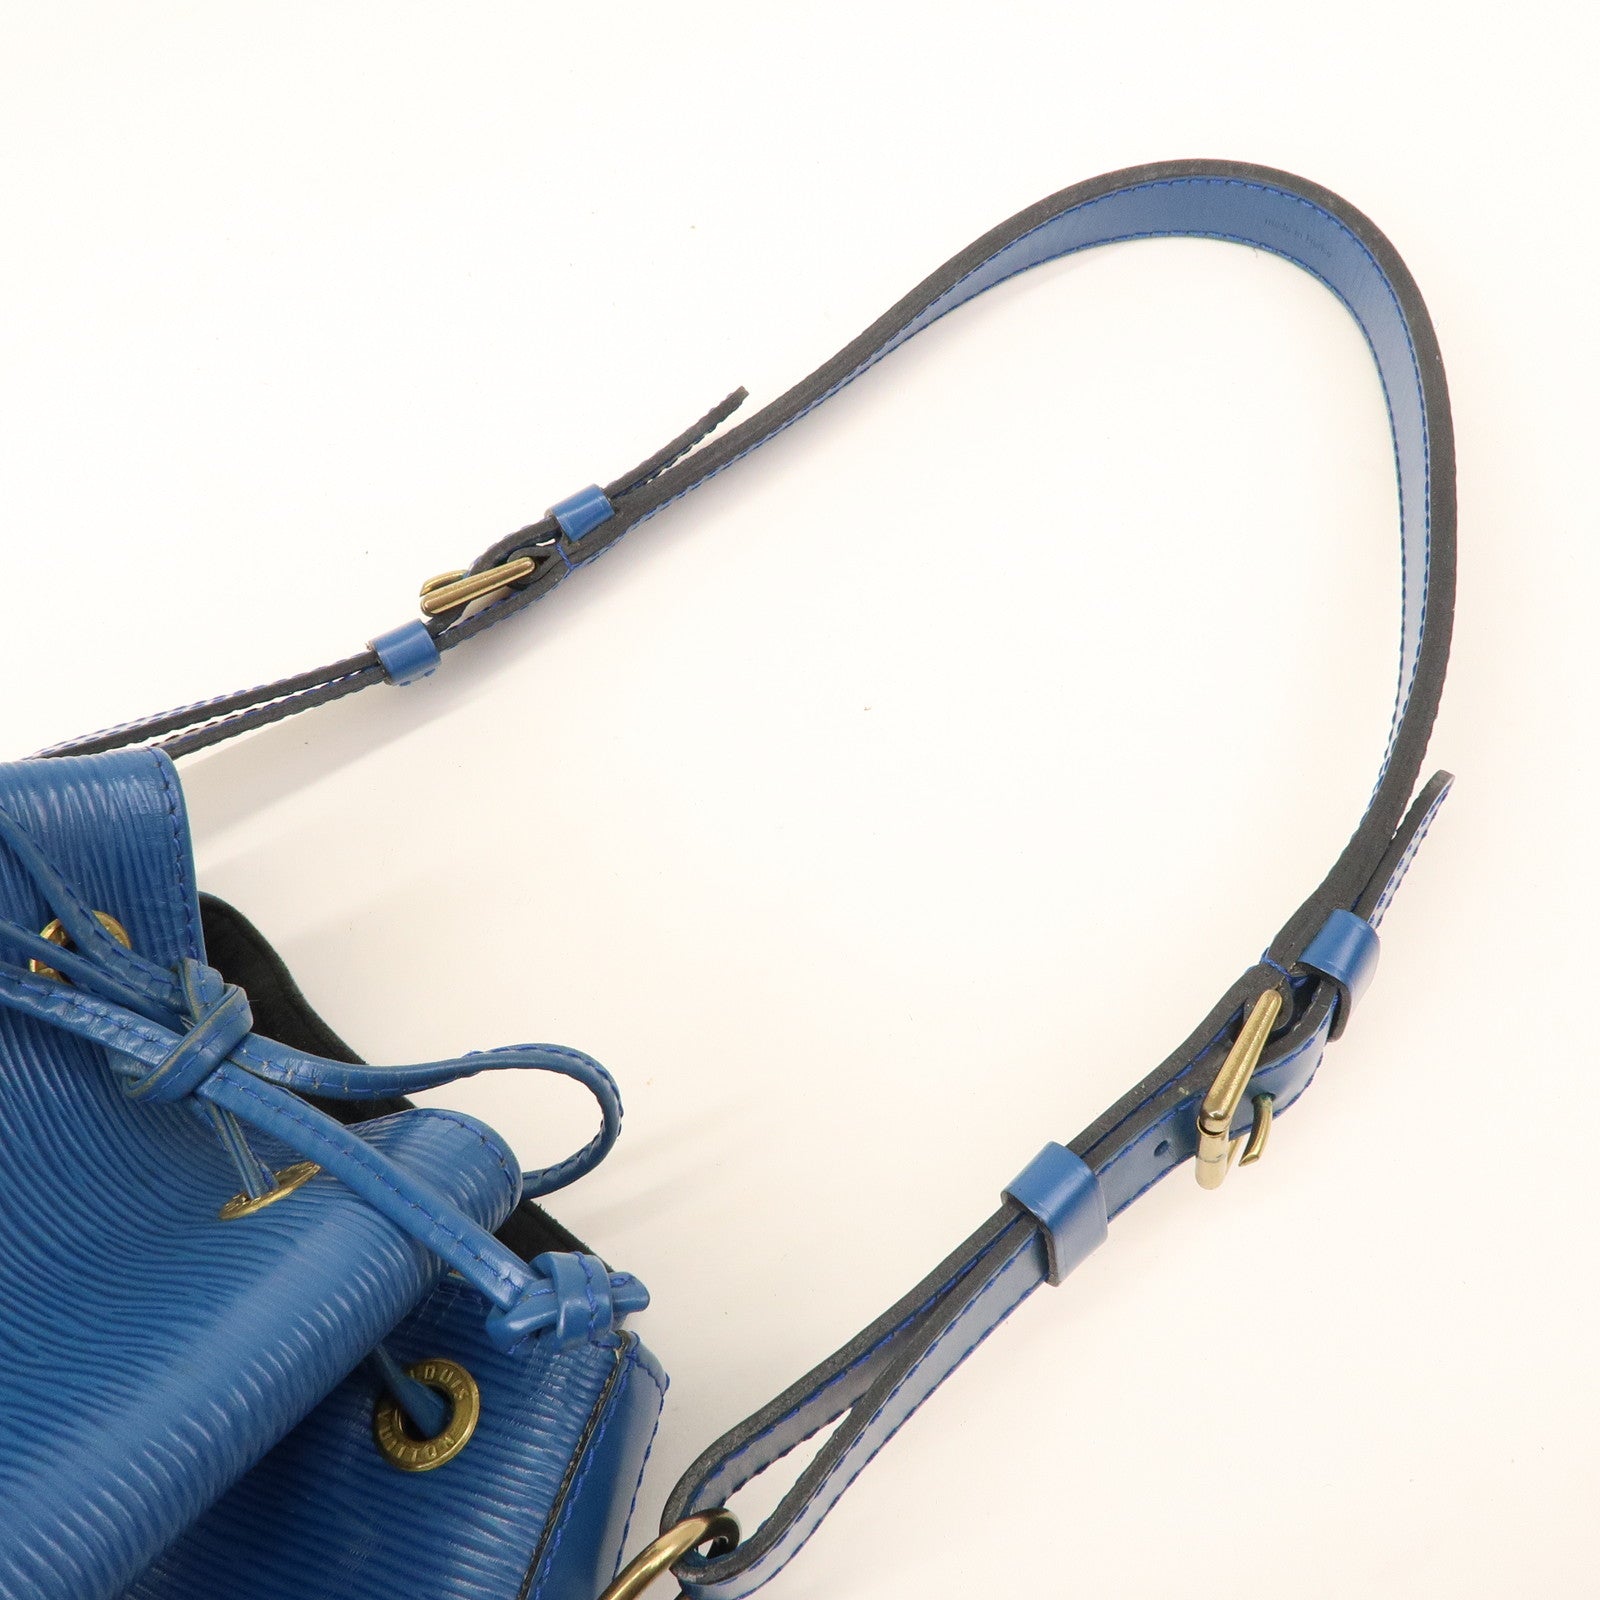 Louis Vuitton Epi Petit Noe M44105 Shoulder Bag Handbag Used